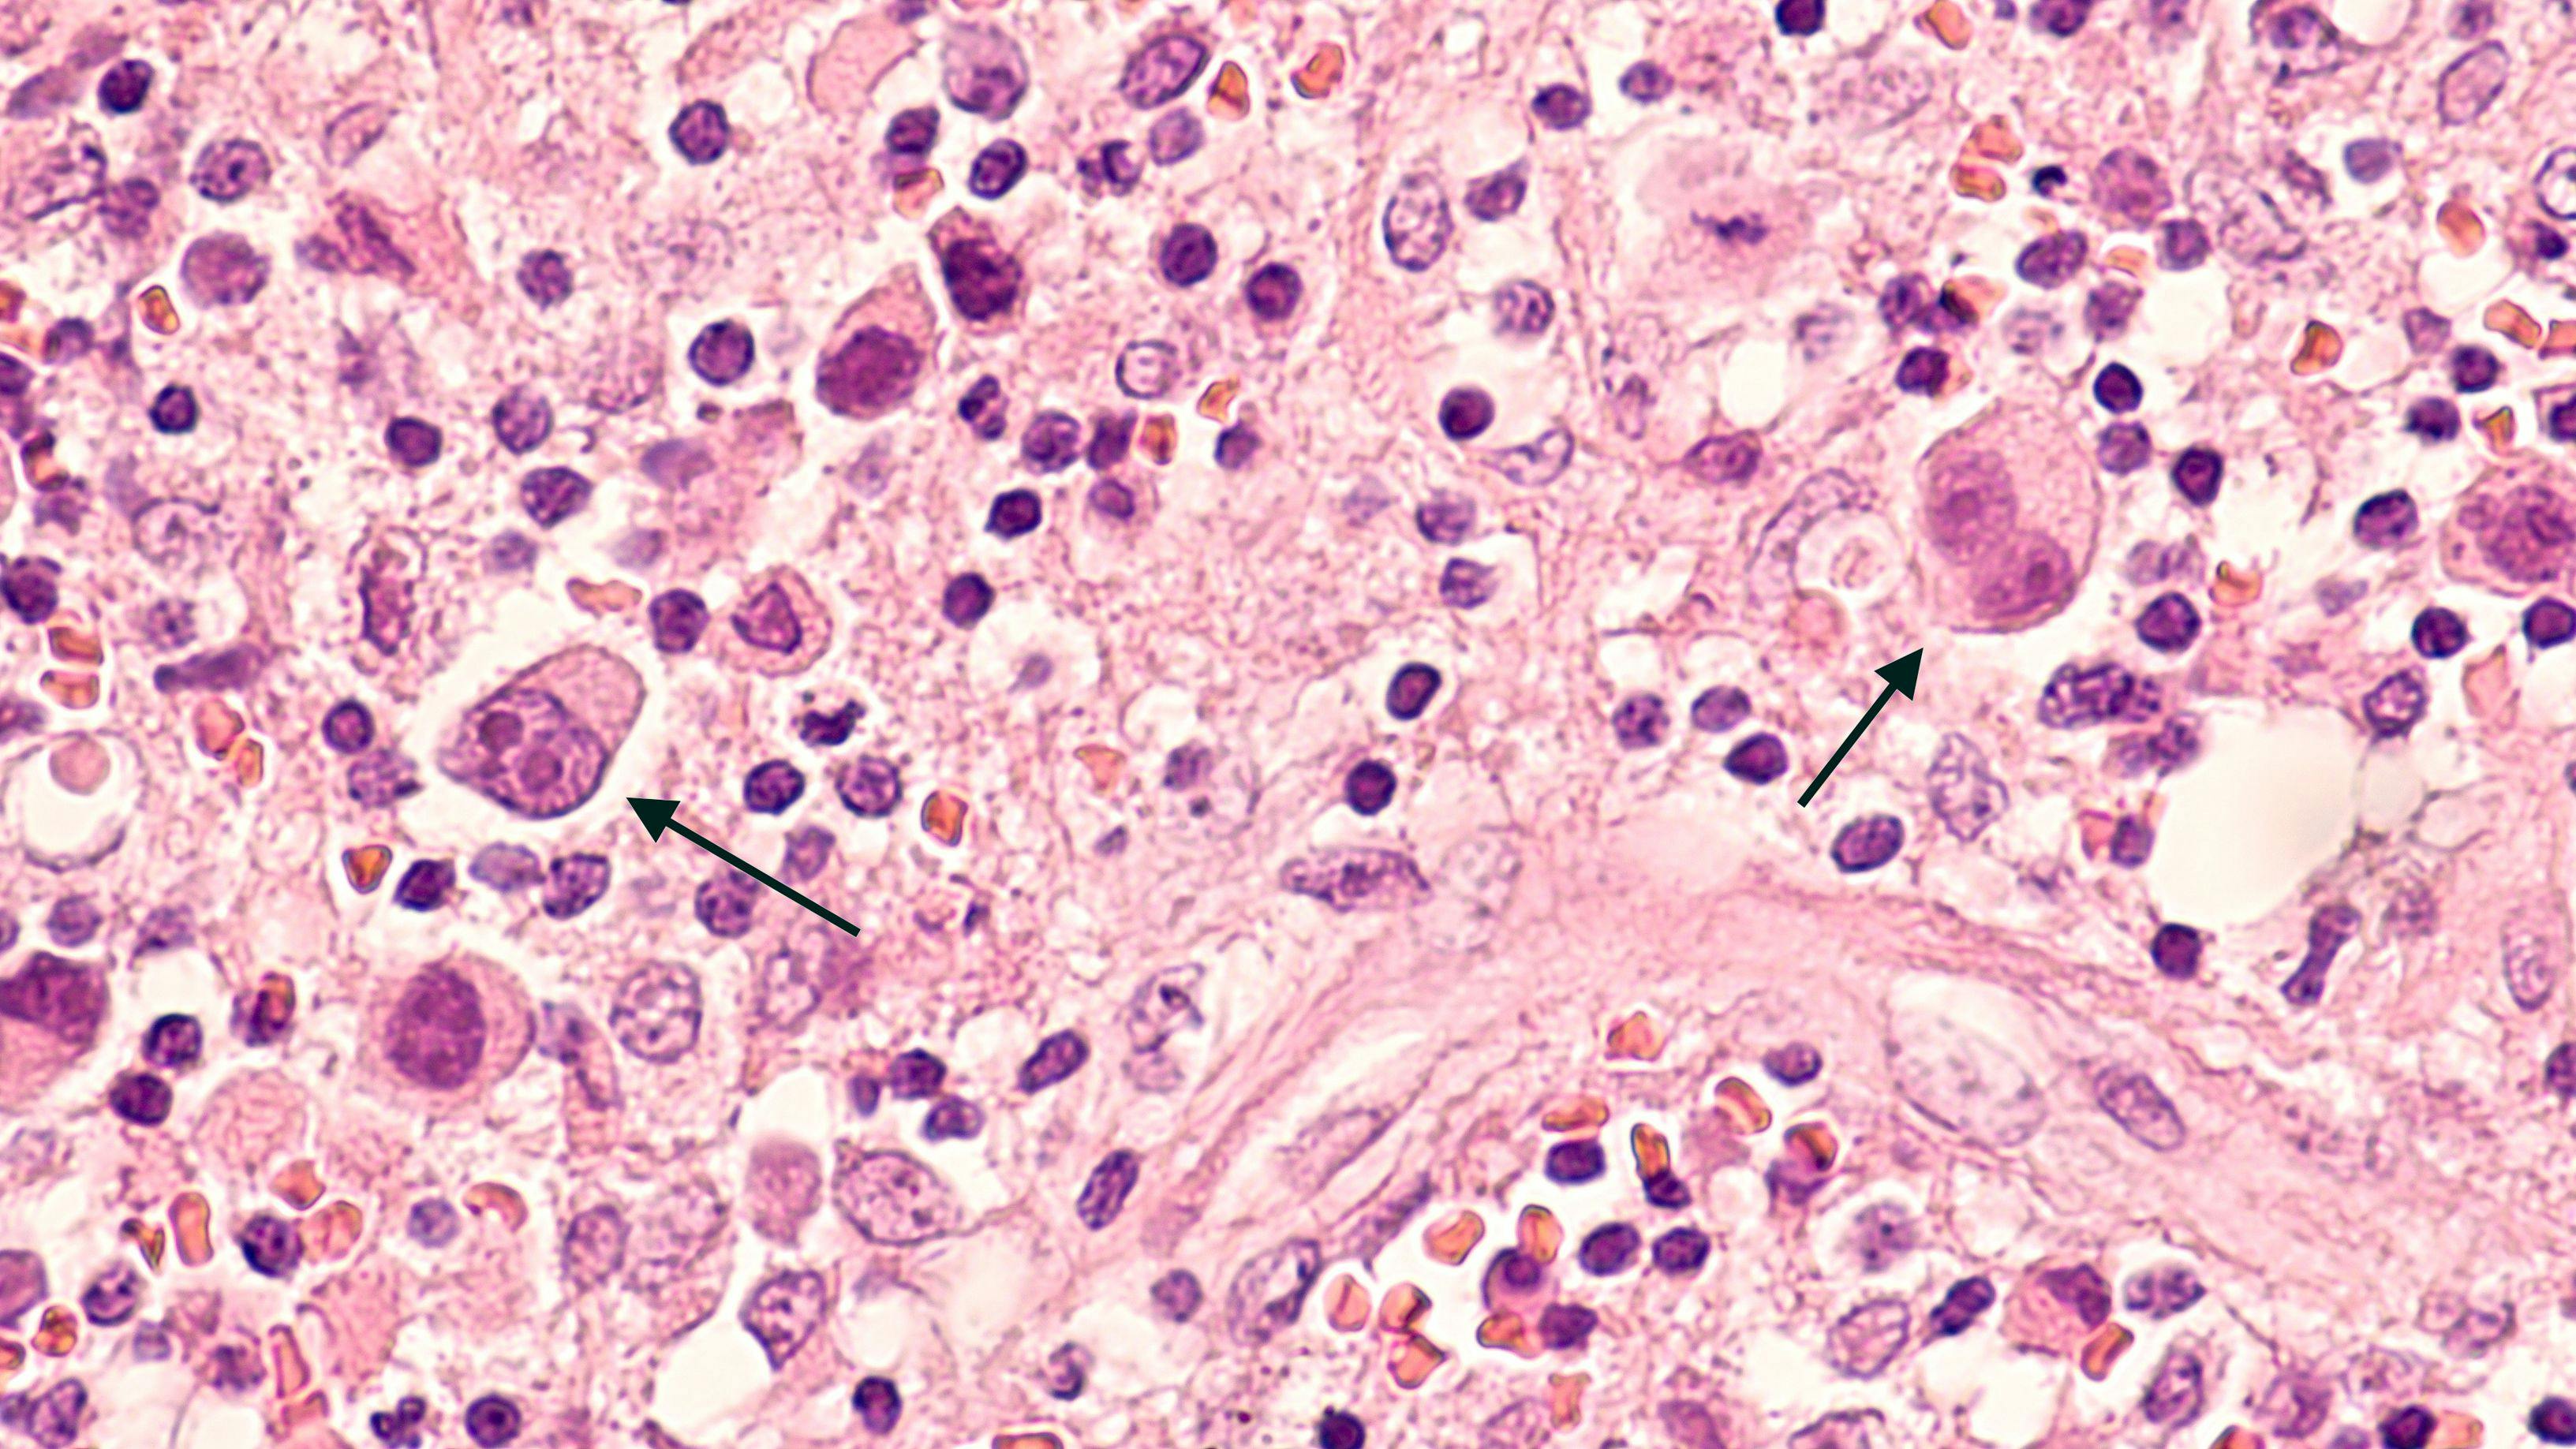 Image of lymphoma cells: © David A Litman - www.stock.adobe.com.jpg